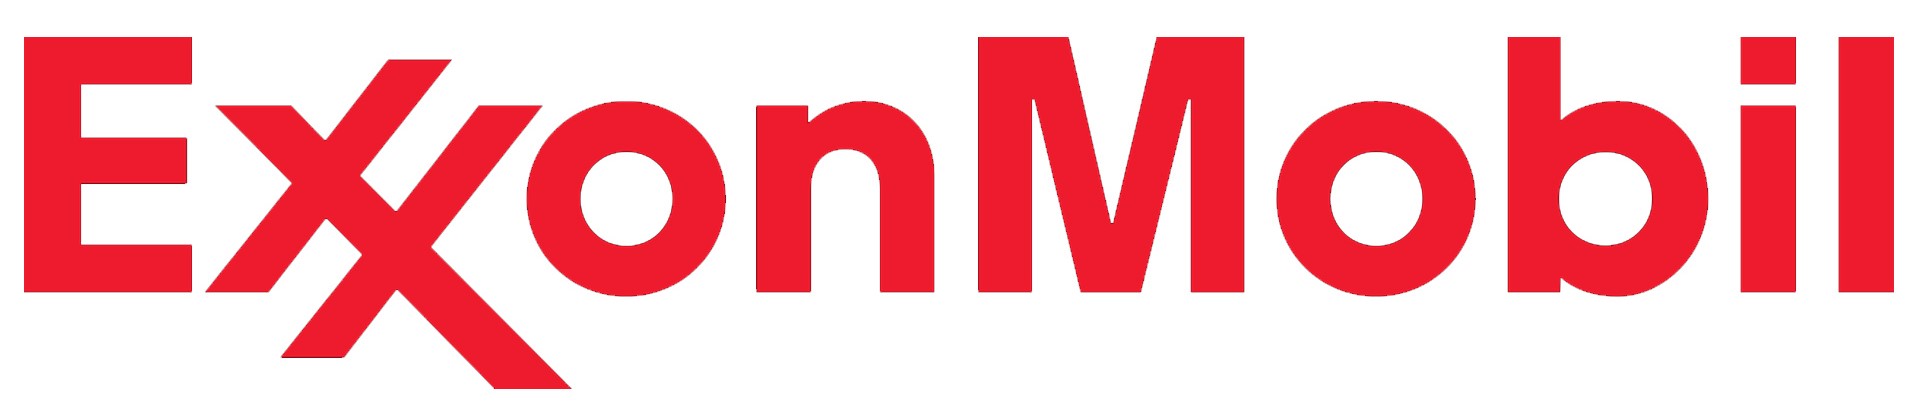 Exxonmobil's logo